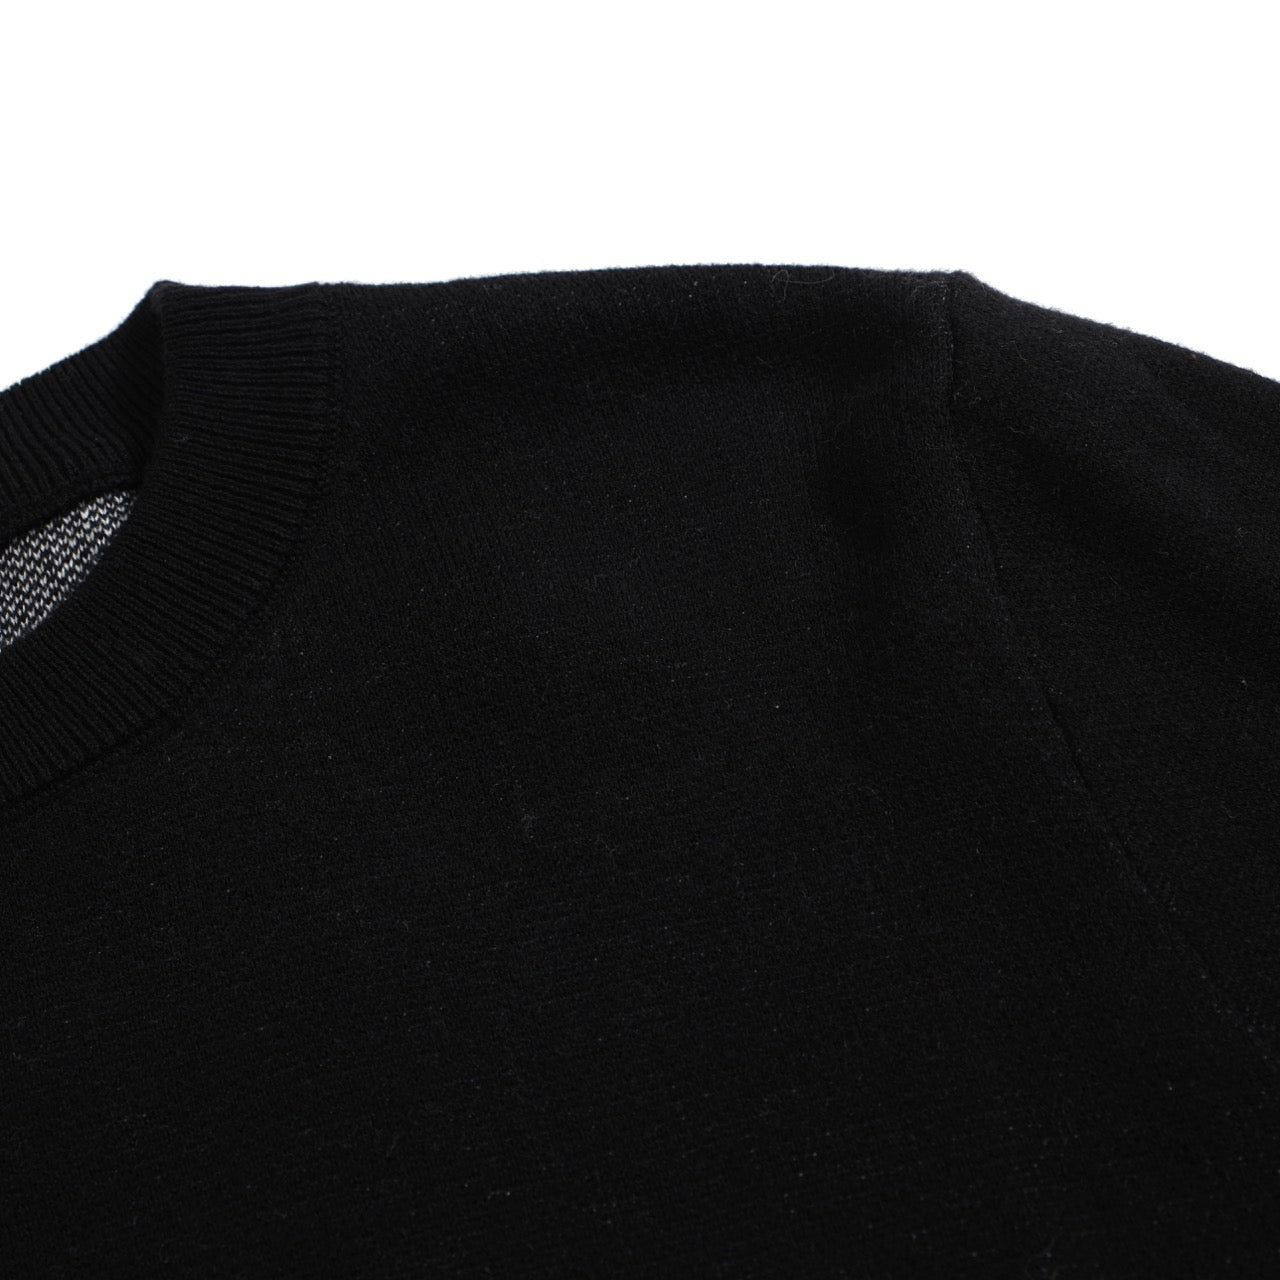 Women 1960s Retro Wave Knitwear T-shirts Black